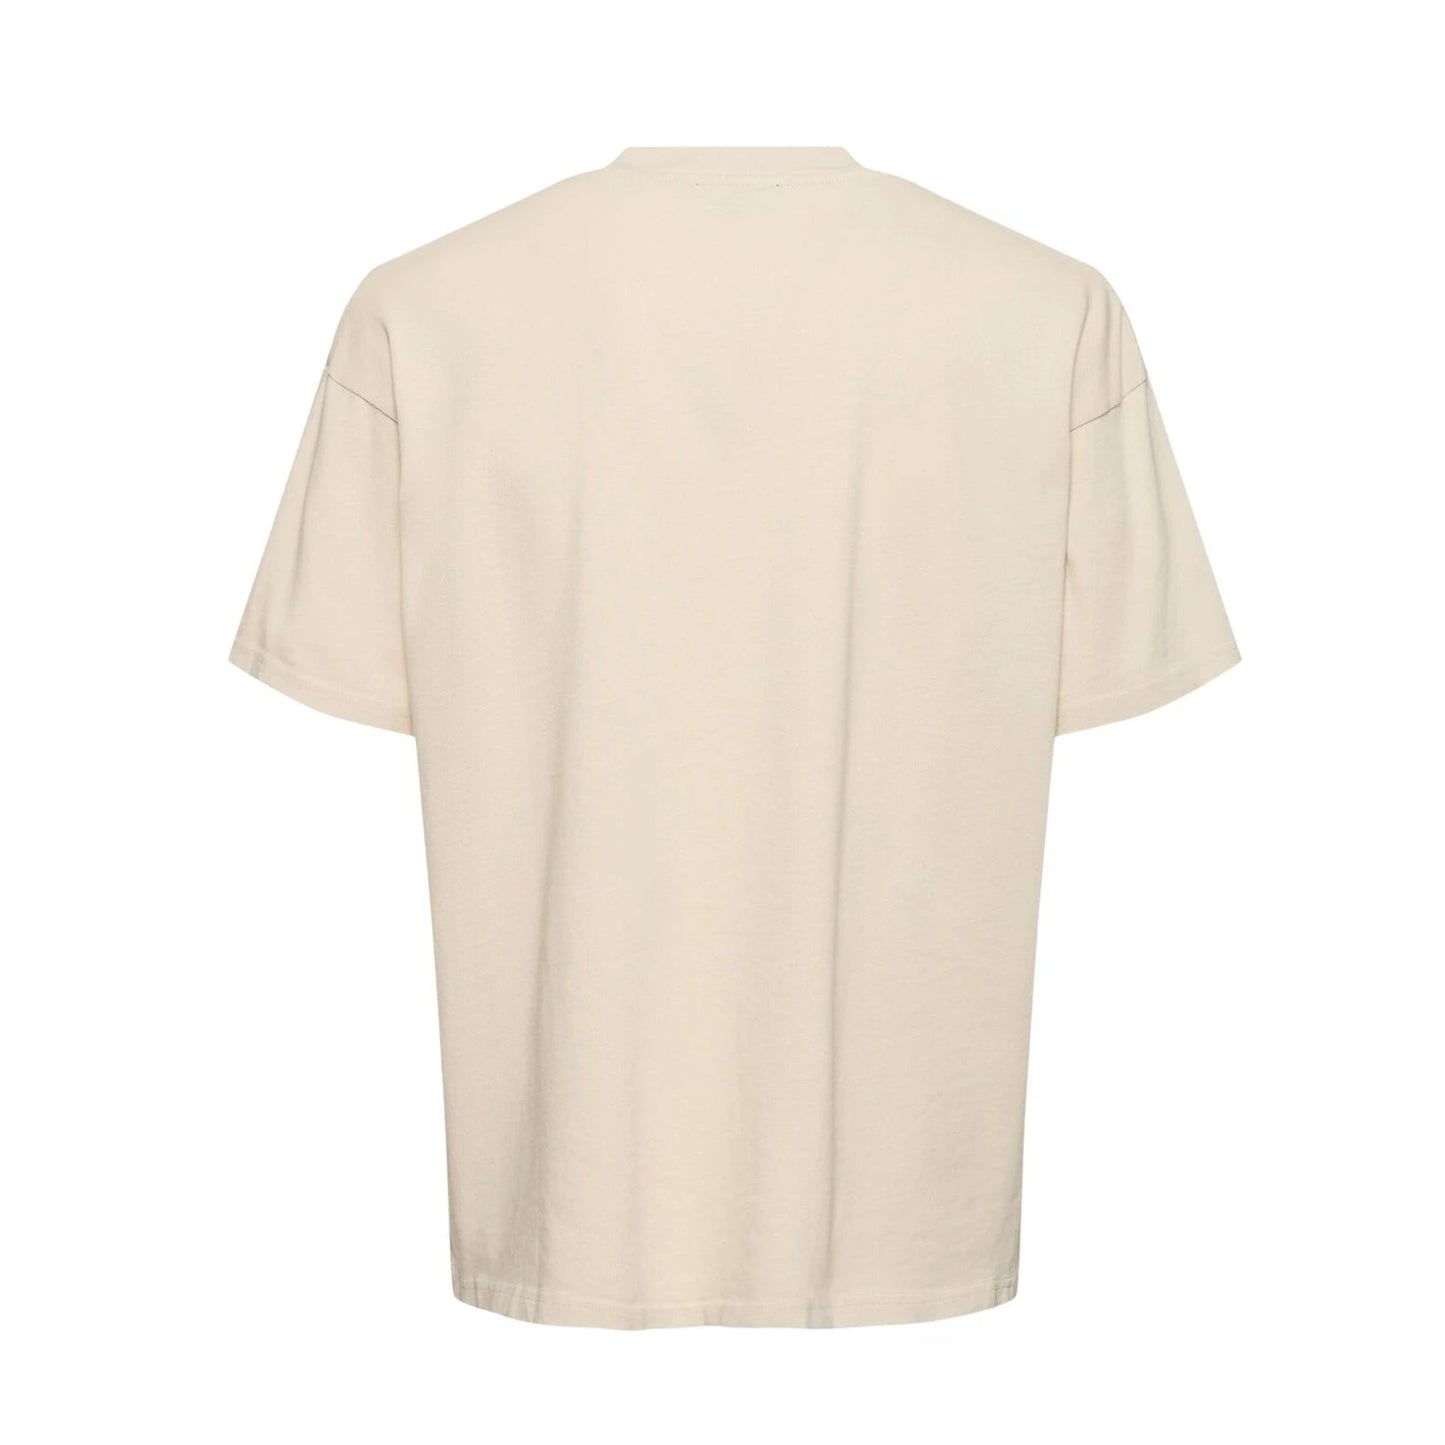 Represent Thoroughbred T-Shirt - 02 Vintage White - Escape Menswear